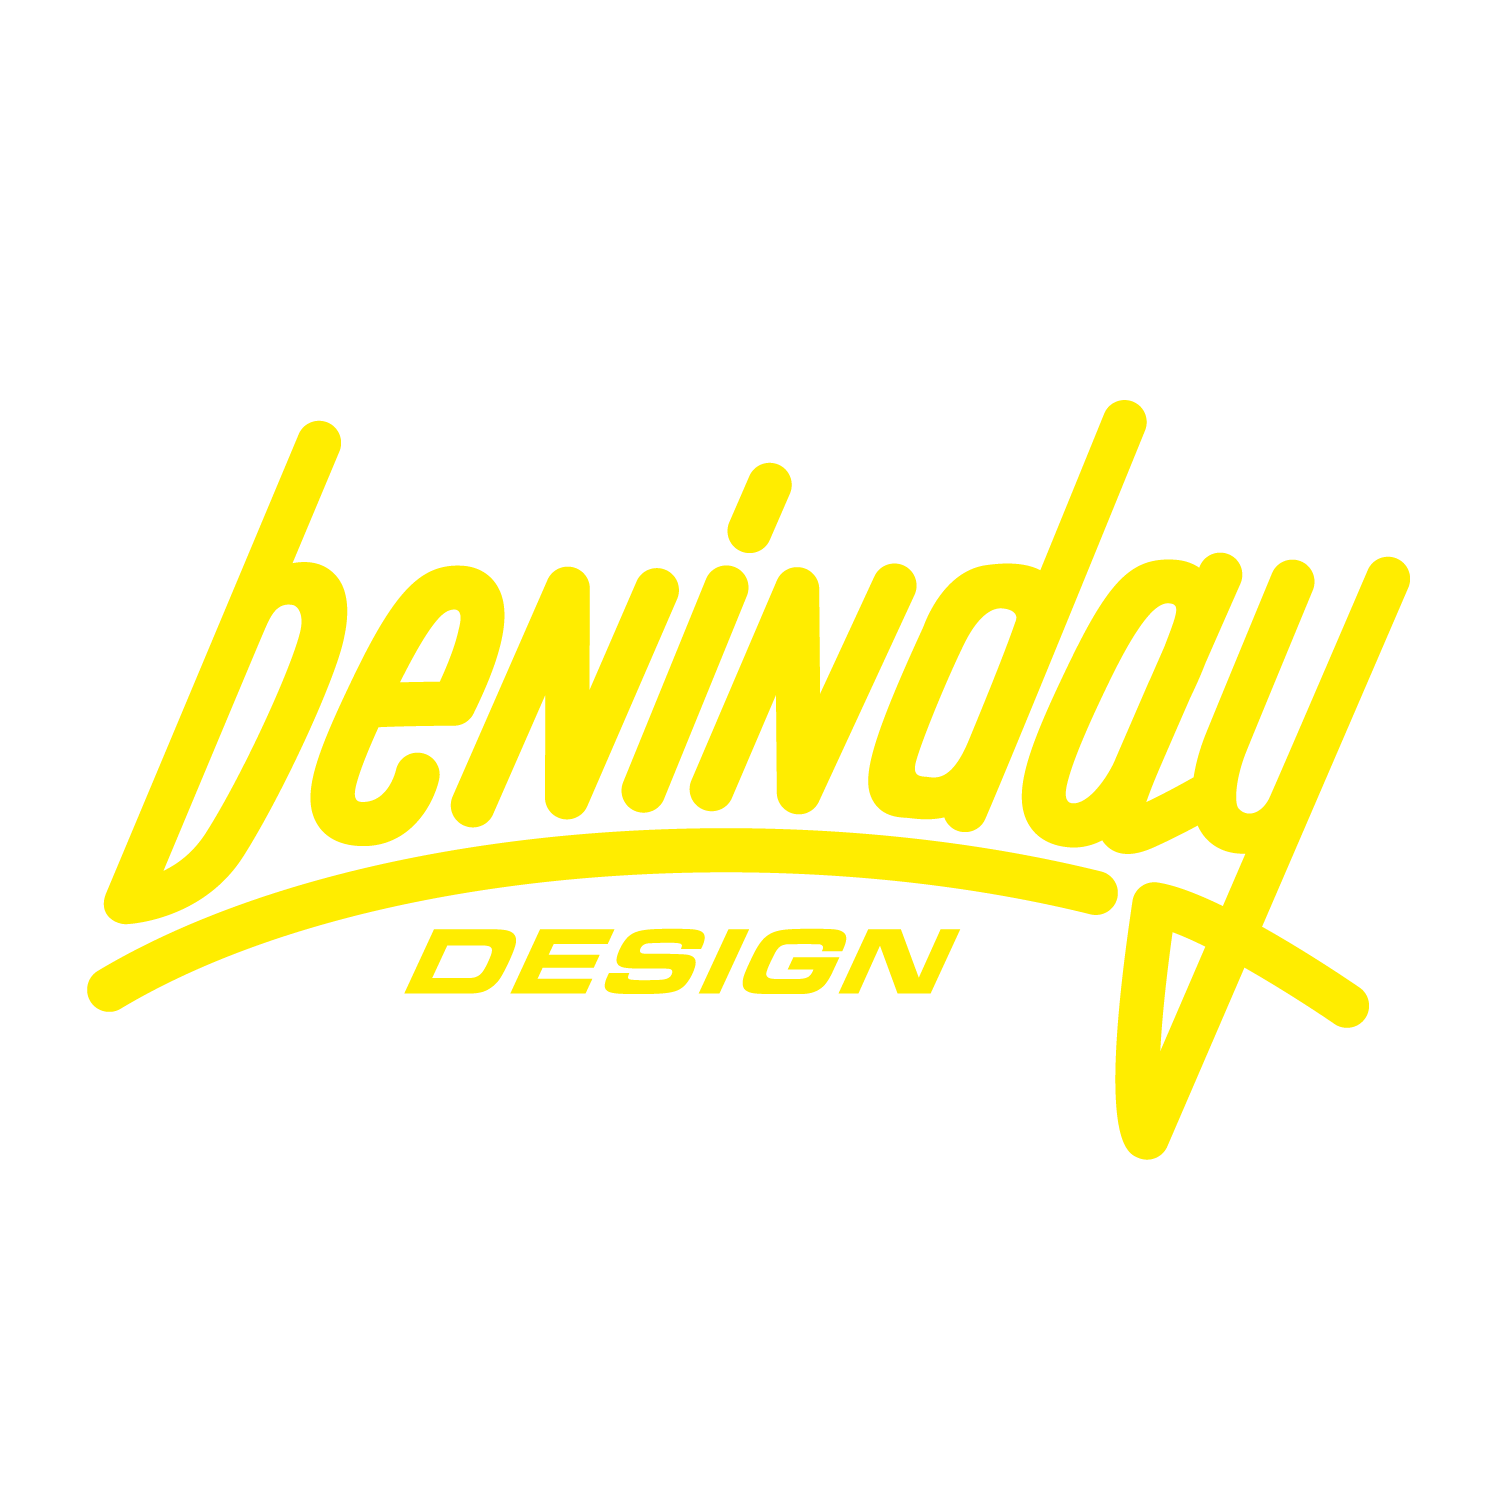 BENINDAY Design